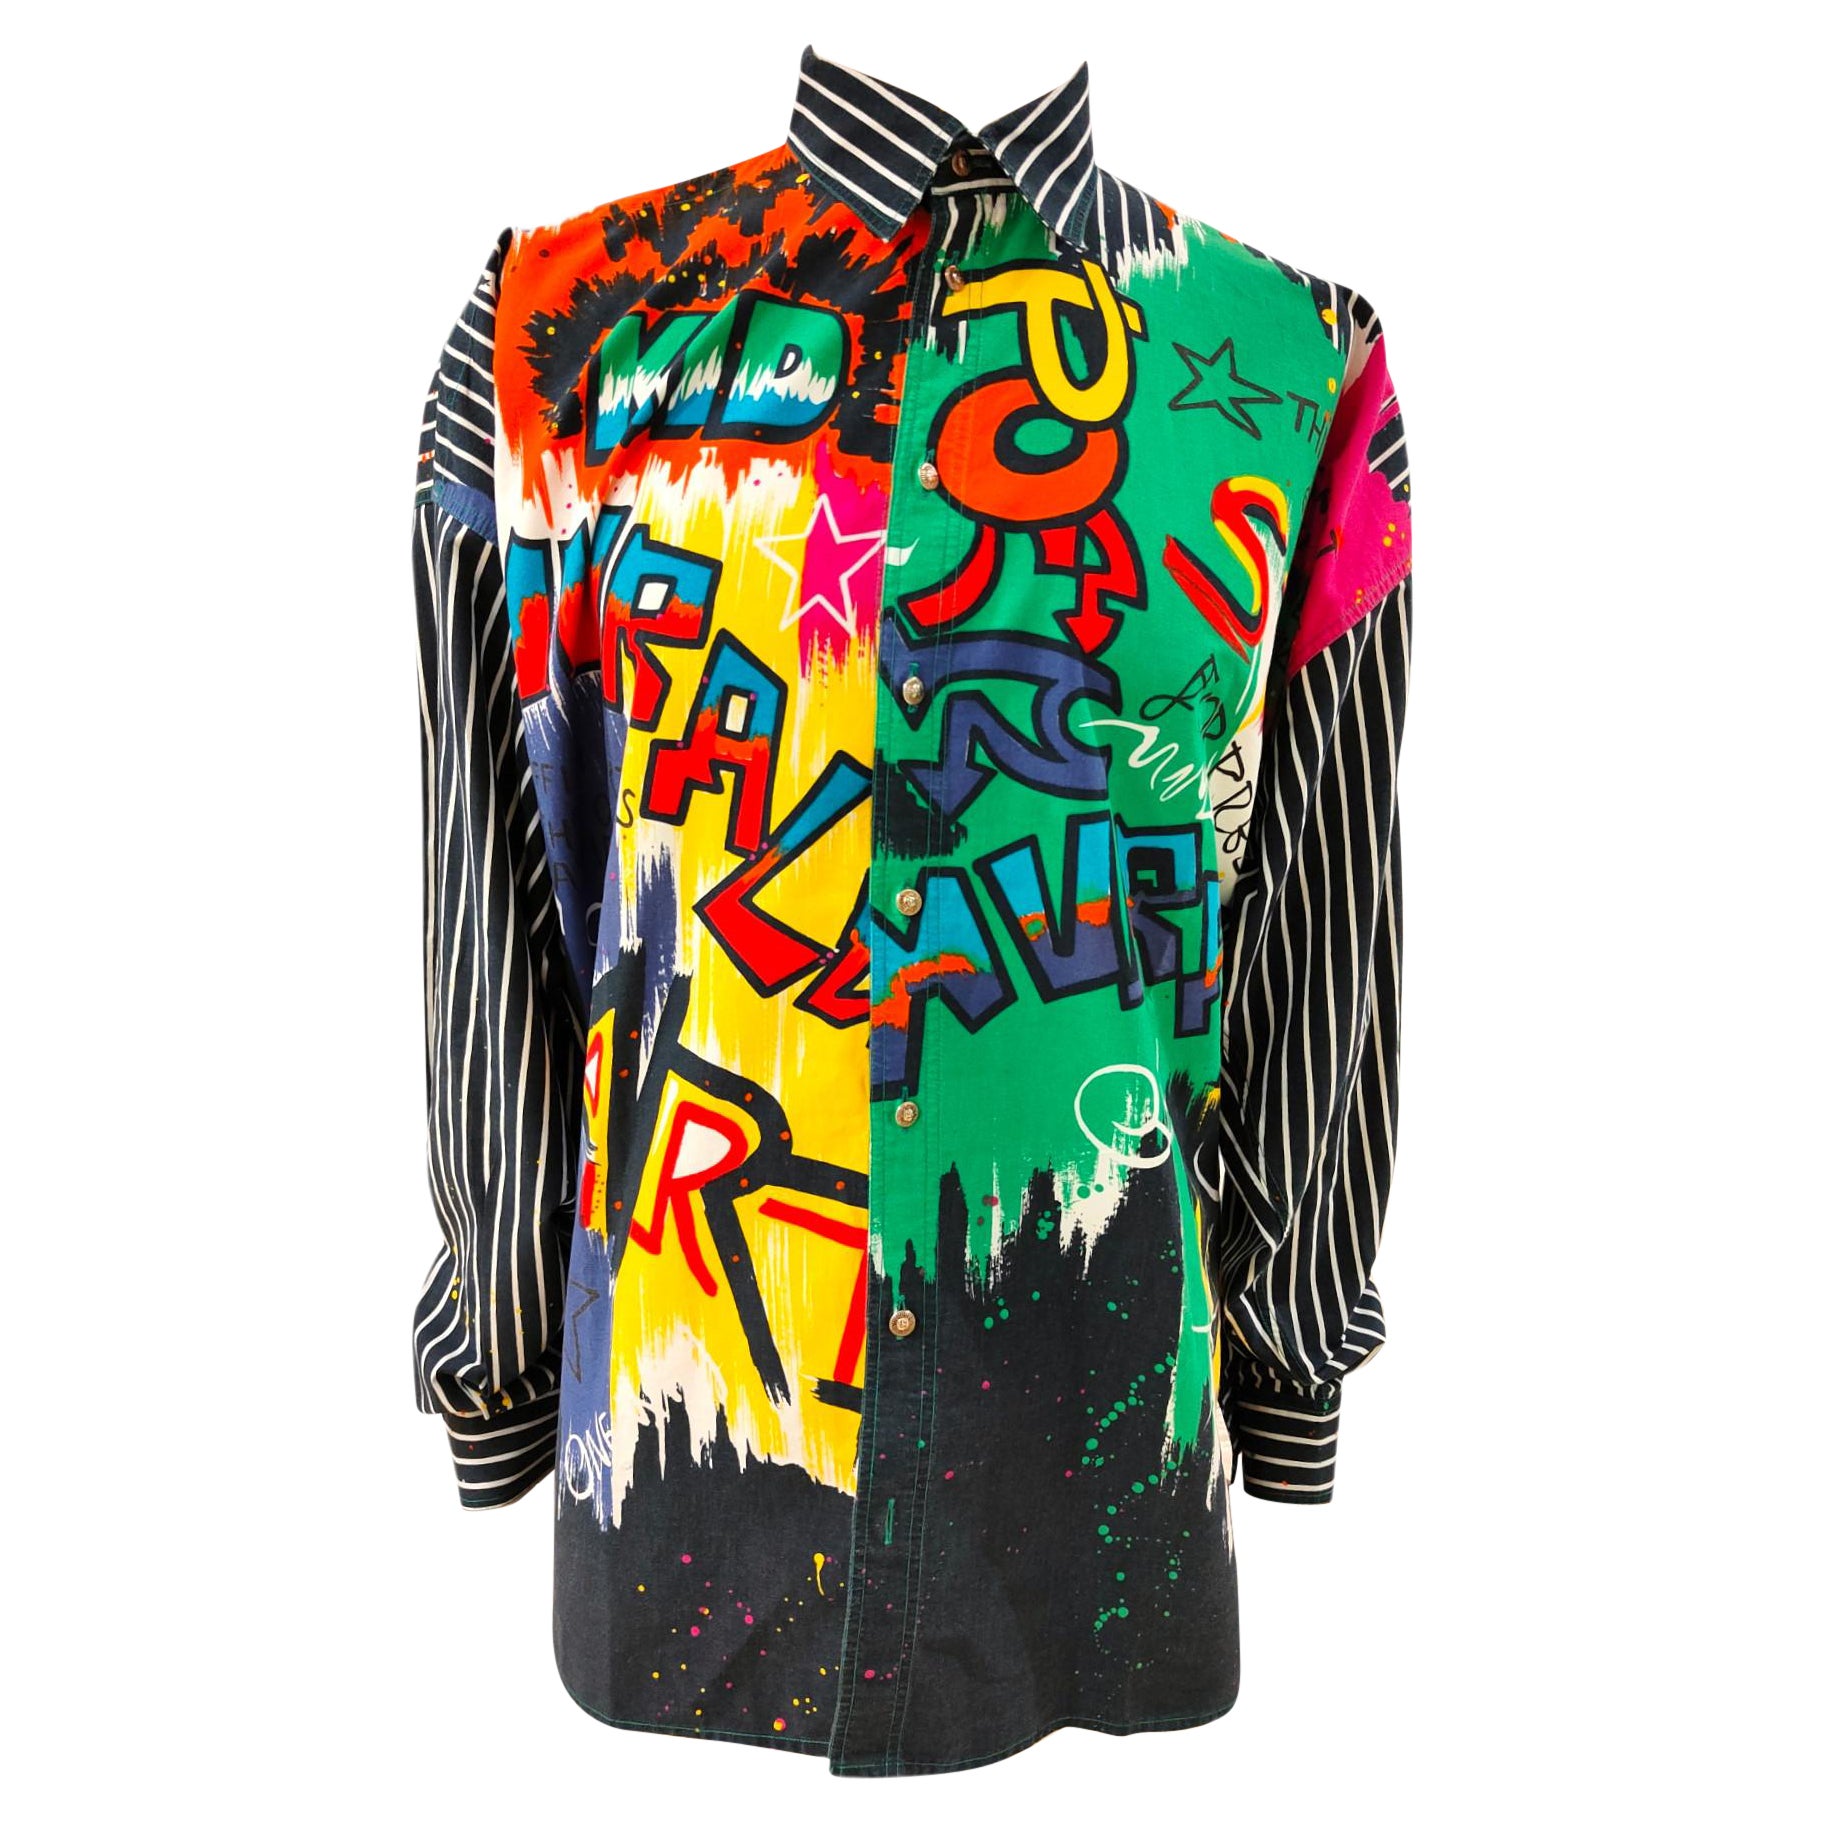 Gianni Versace Graffiti art shirt